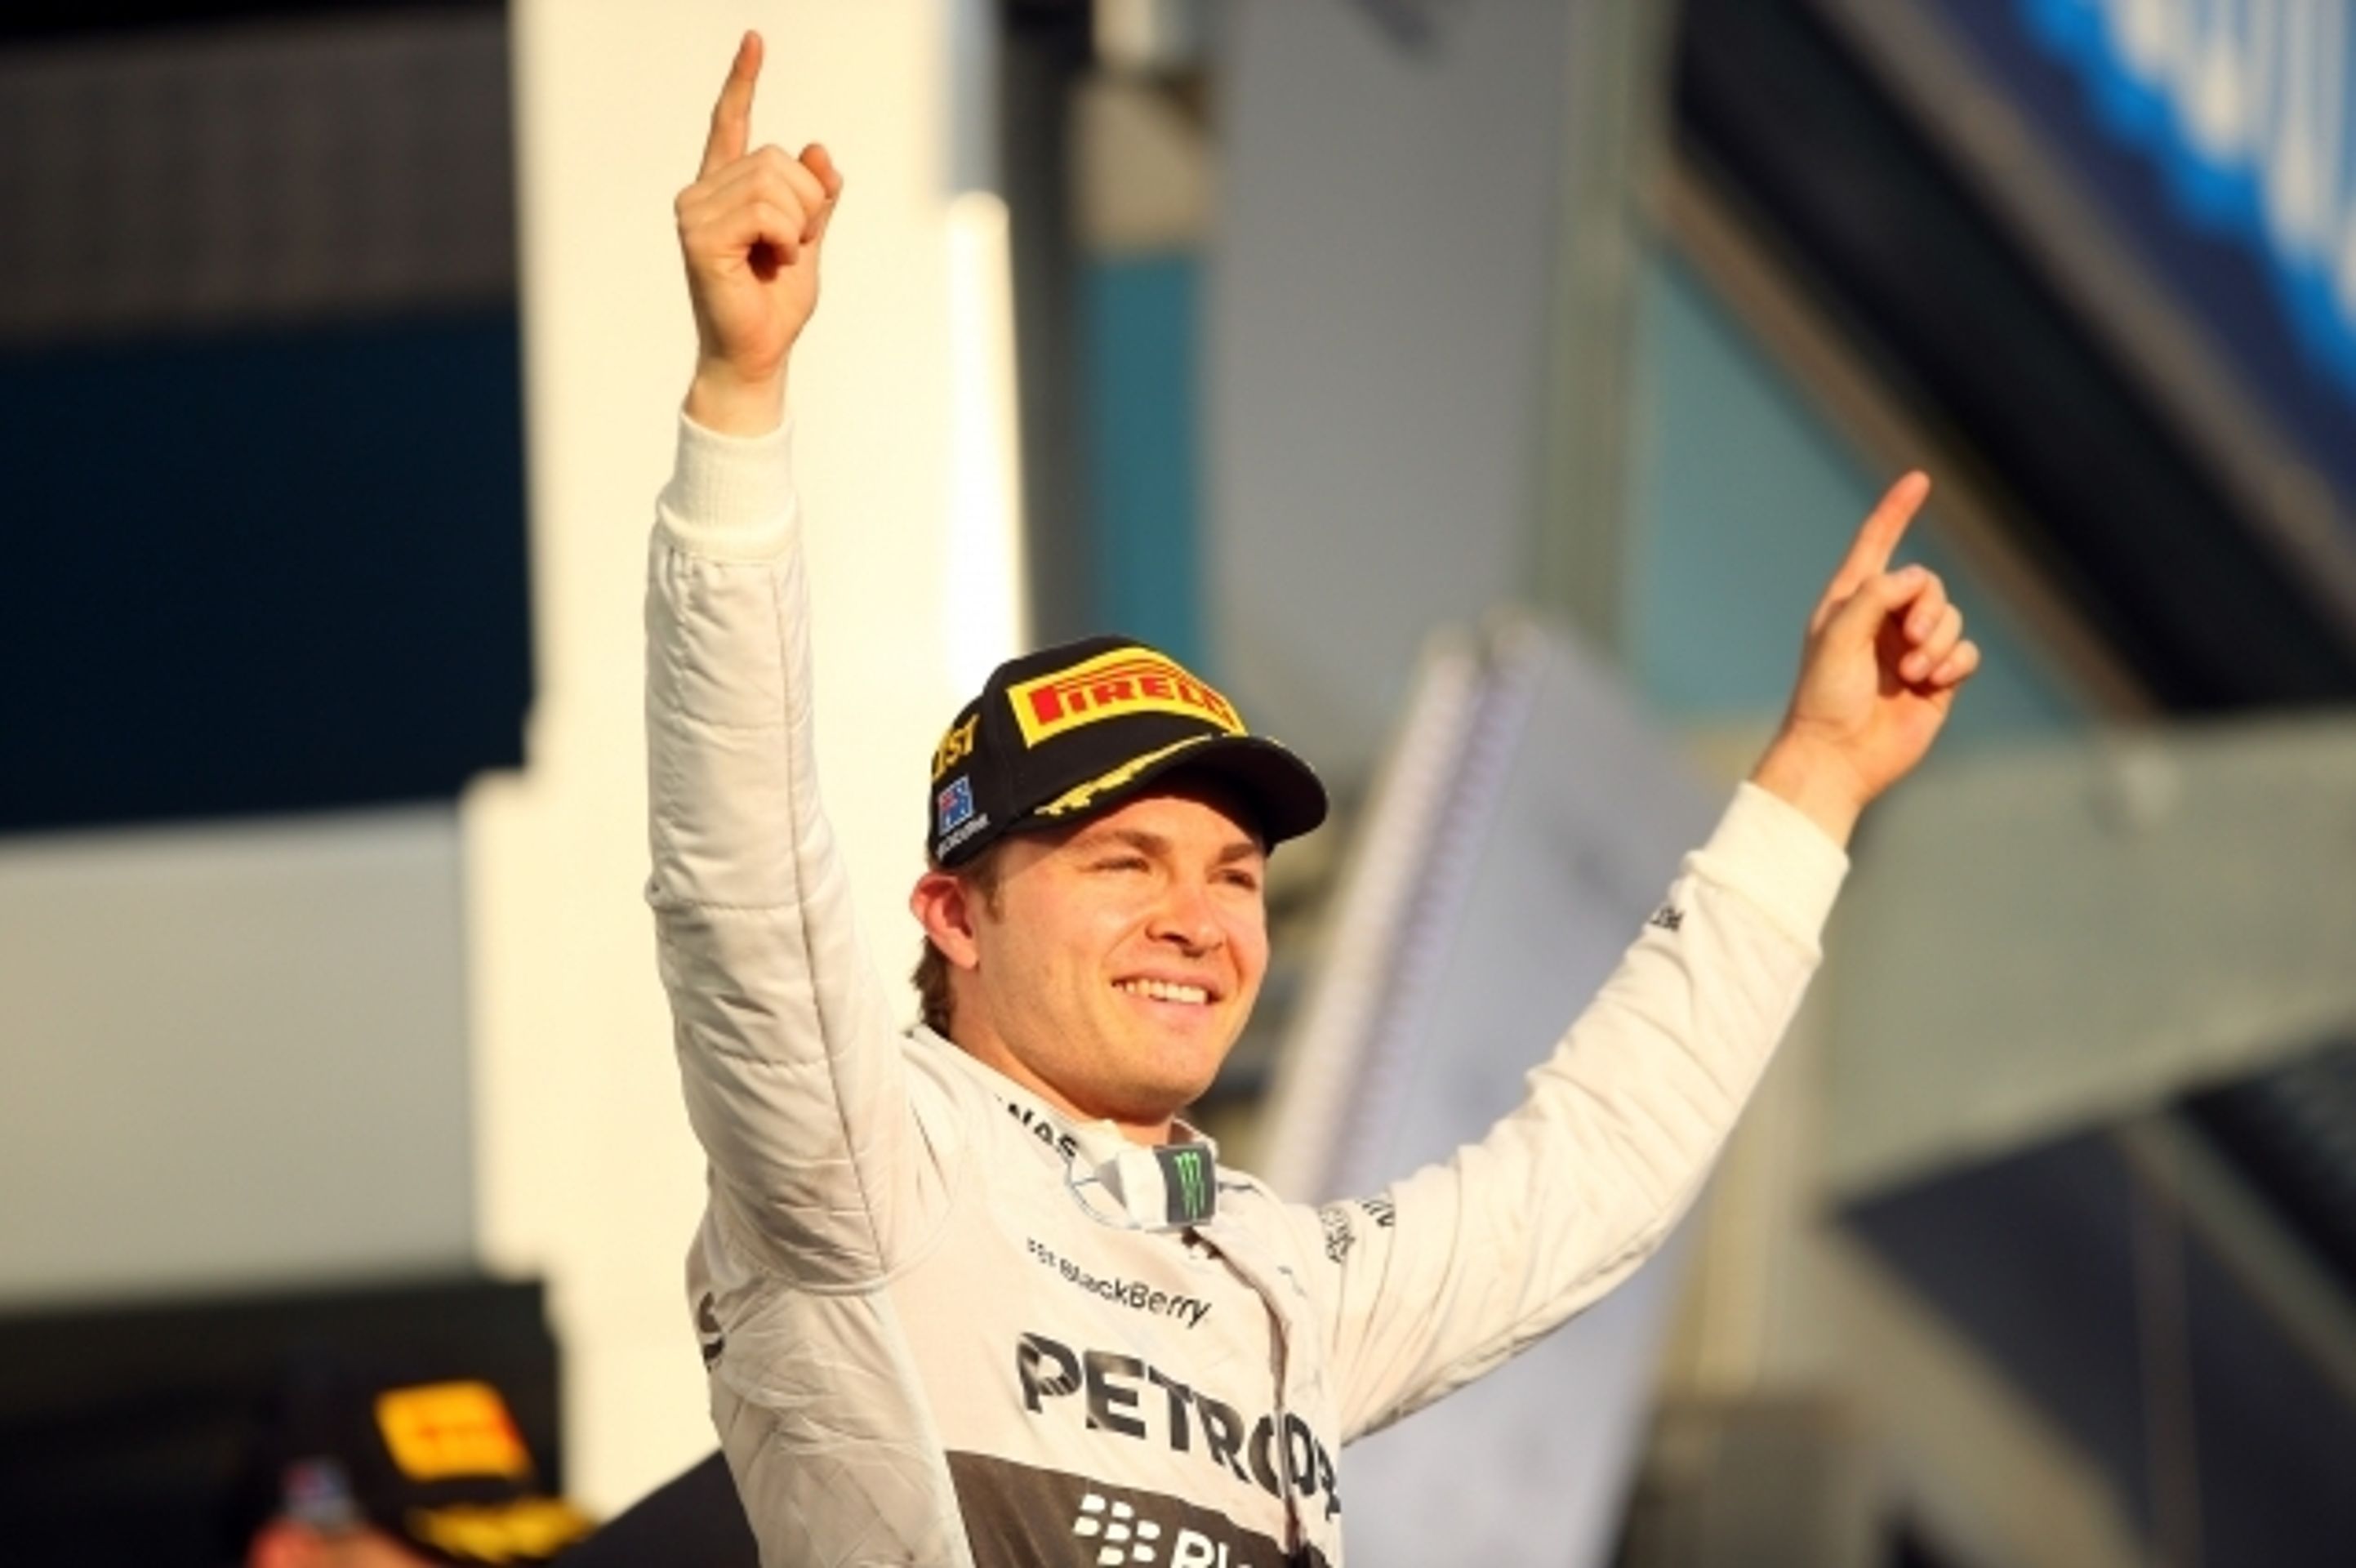 Velká cena Austrálie, Rosberg, Ricciardo, Magnussen - 3 - GALERIE: Rosberg ovládl Velkou cenu Austrálie, domácí Ricciardo byl druhý (8/10)